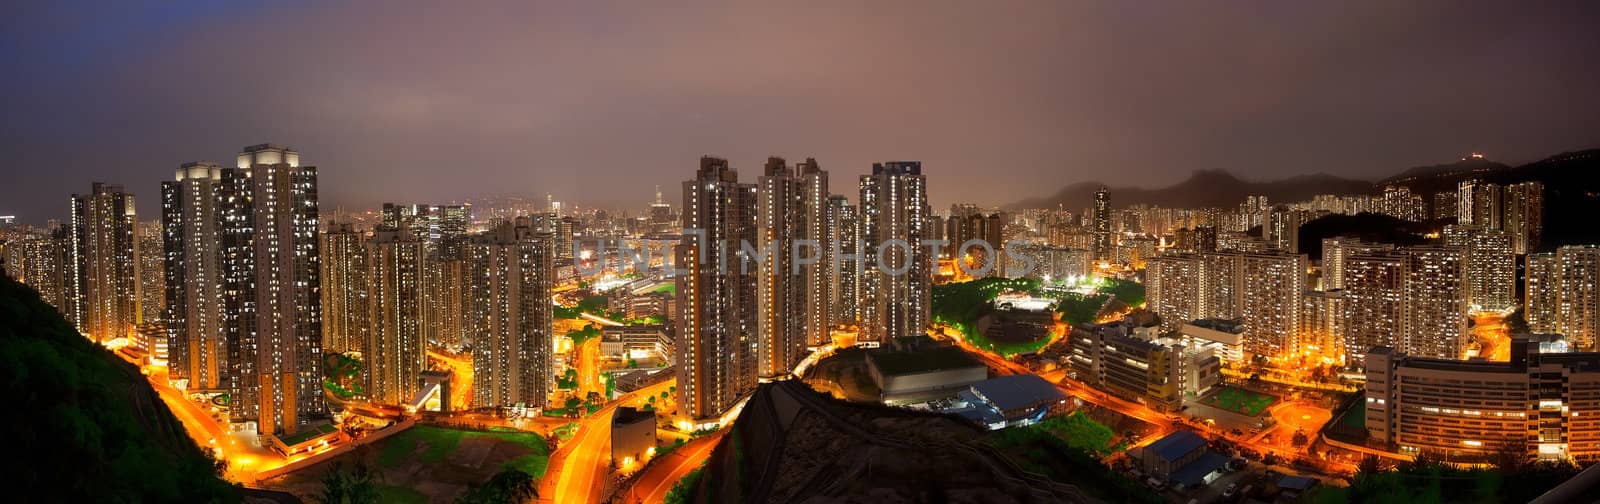 hongkong city sunset by cozyta